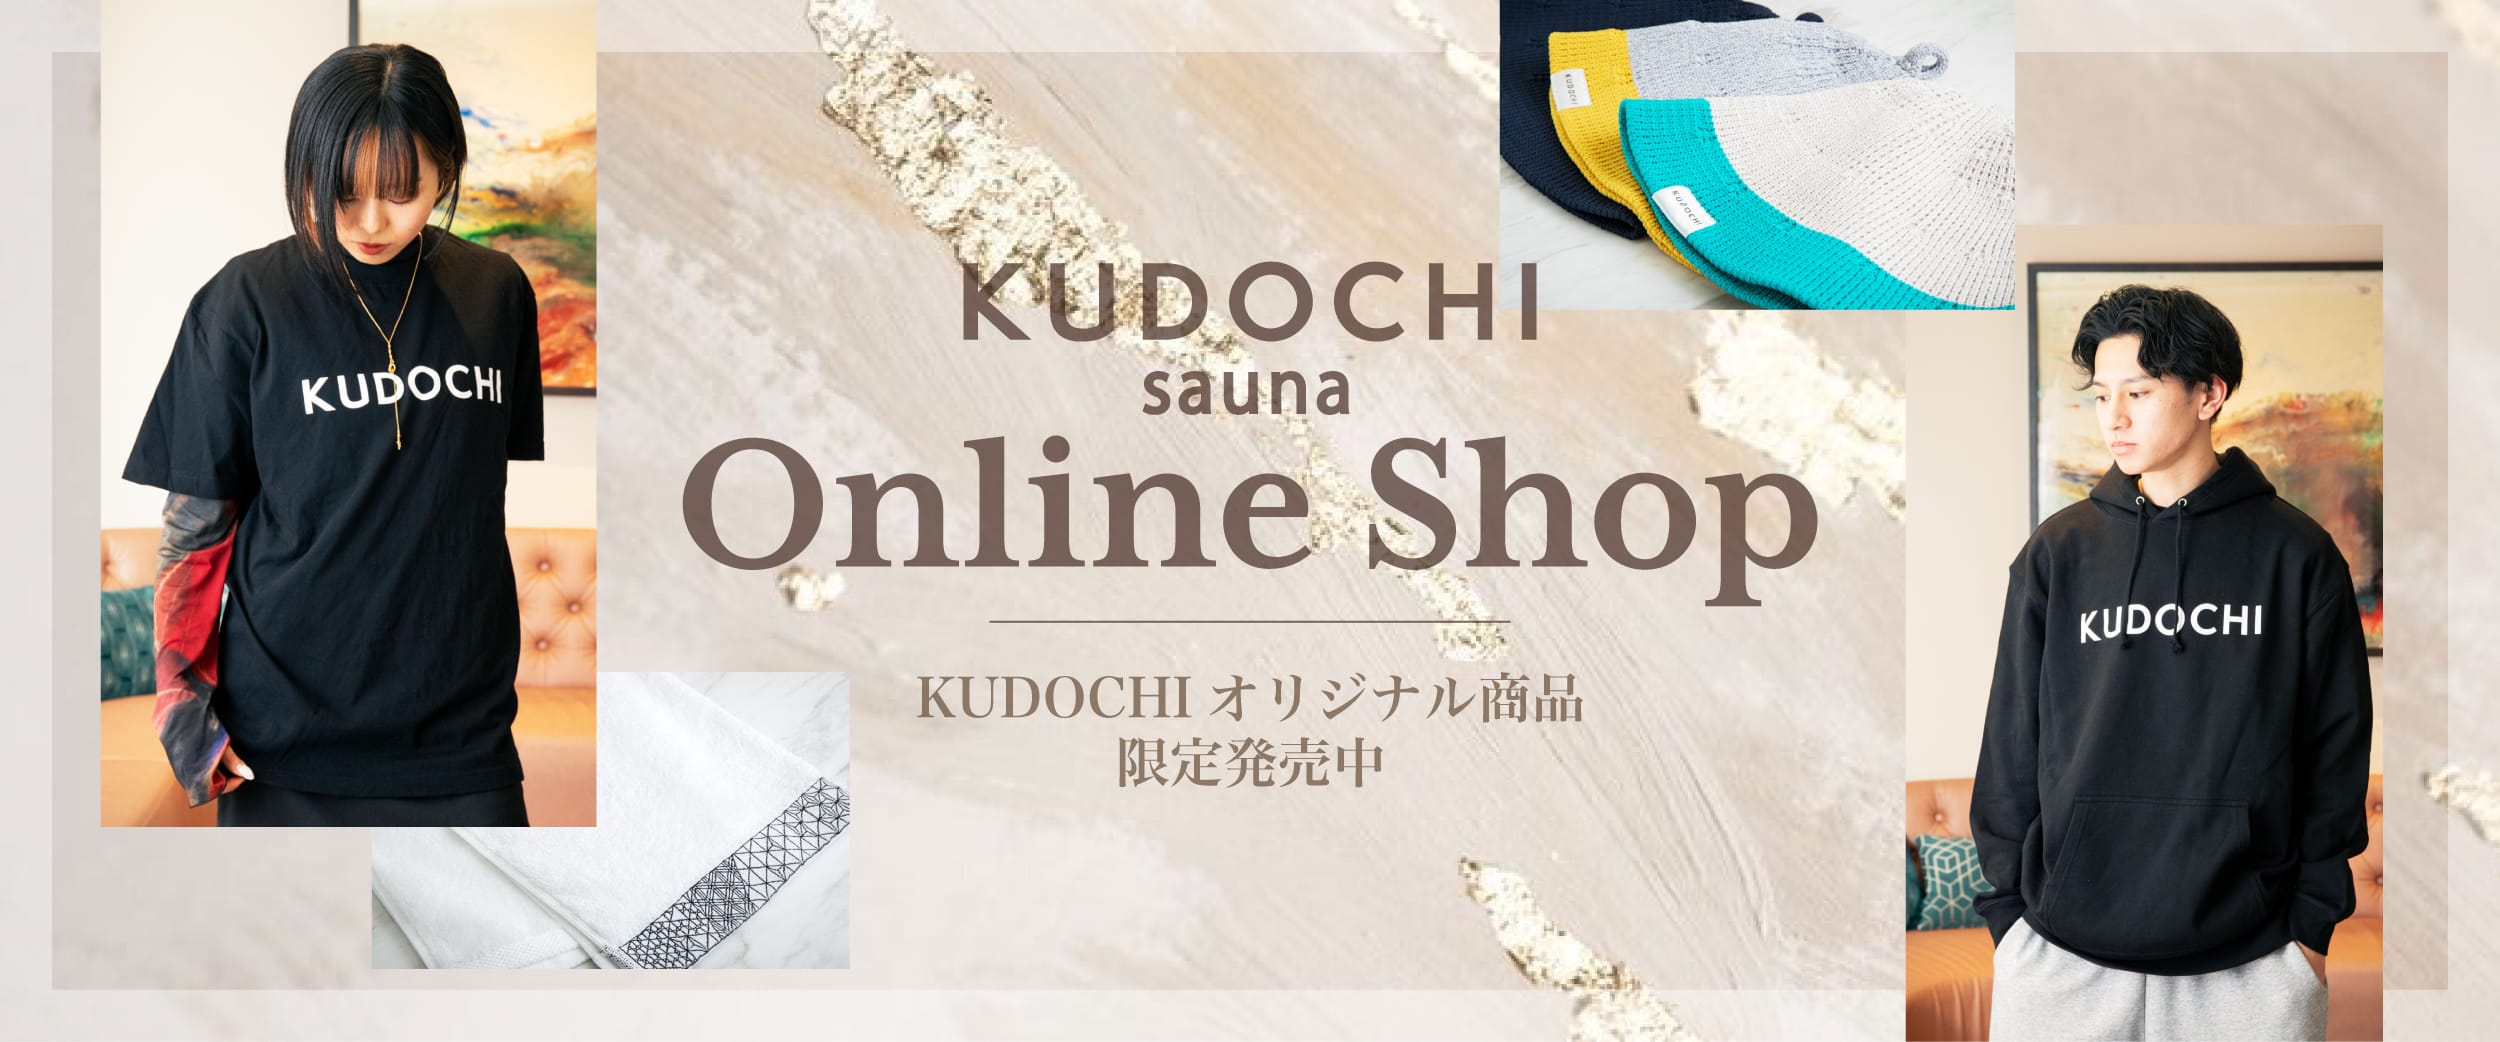 KUDOCHI sauna Online Shop KUDOCHI オリジナル商品限定発売中